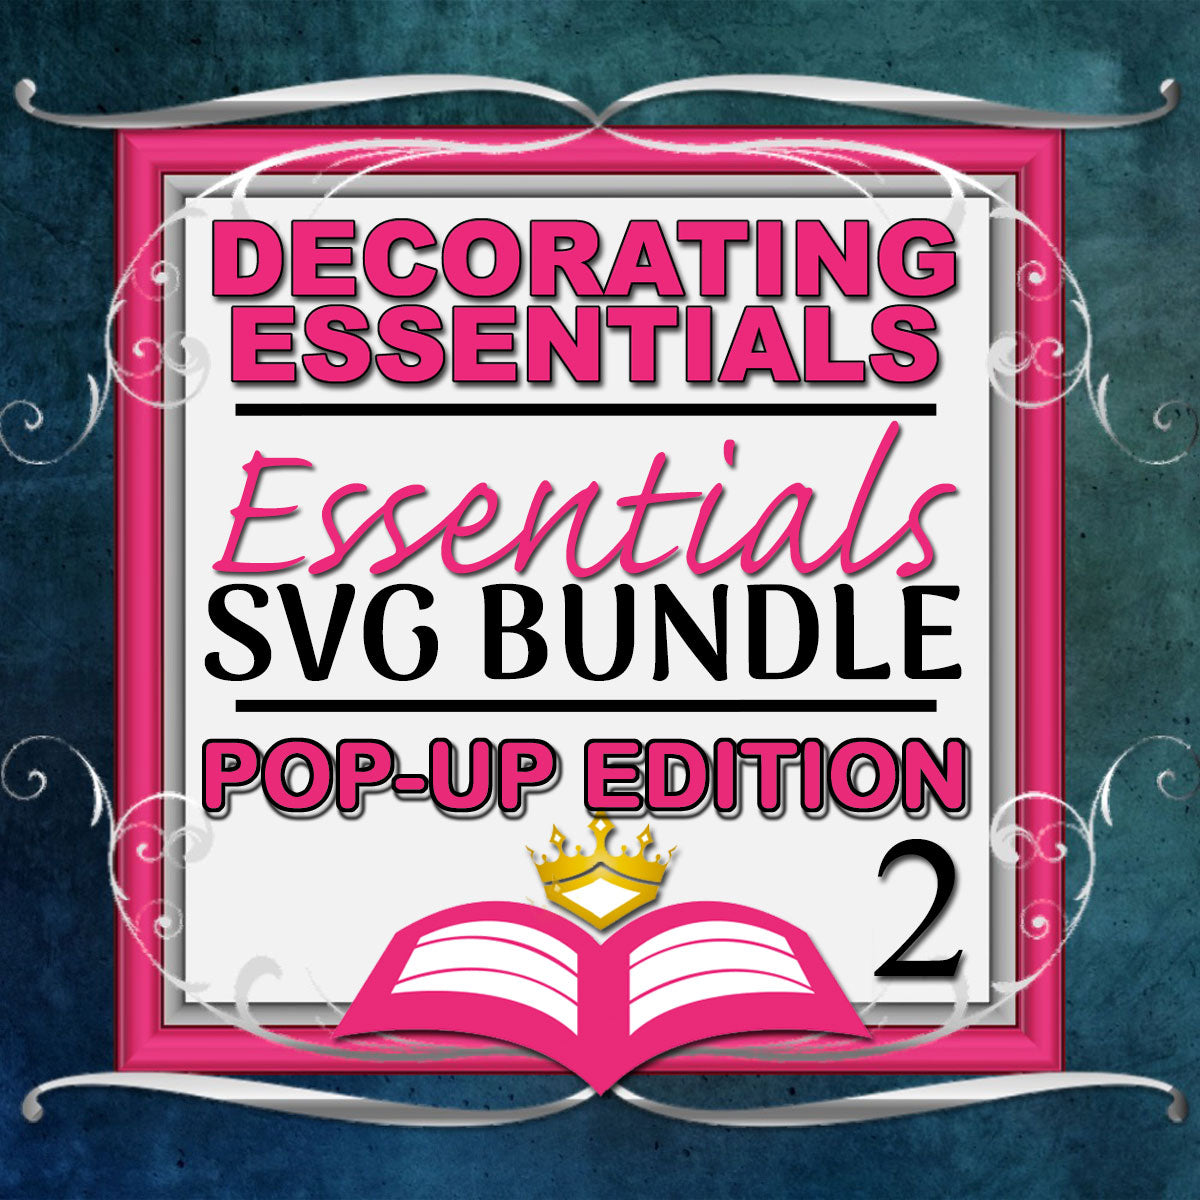 Essentials SVG Bundle 2 - Pop-Up Edition